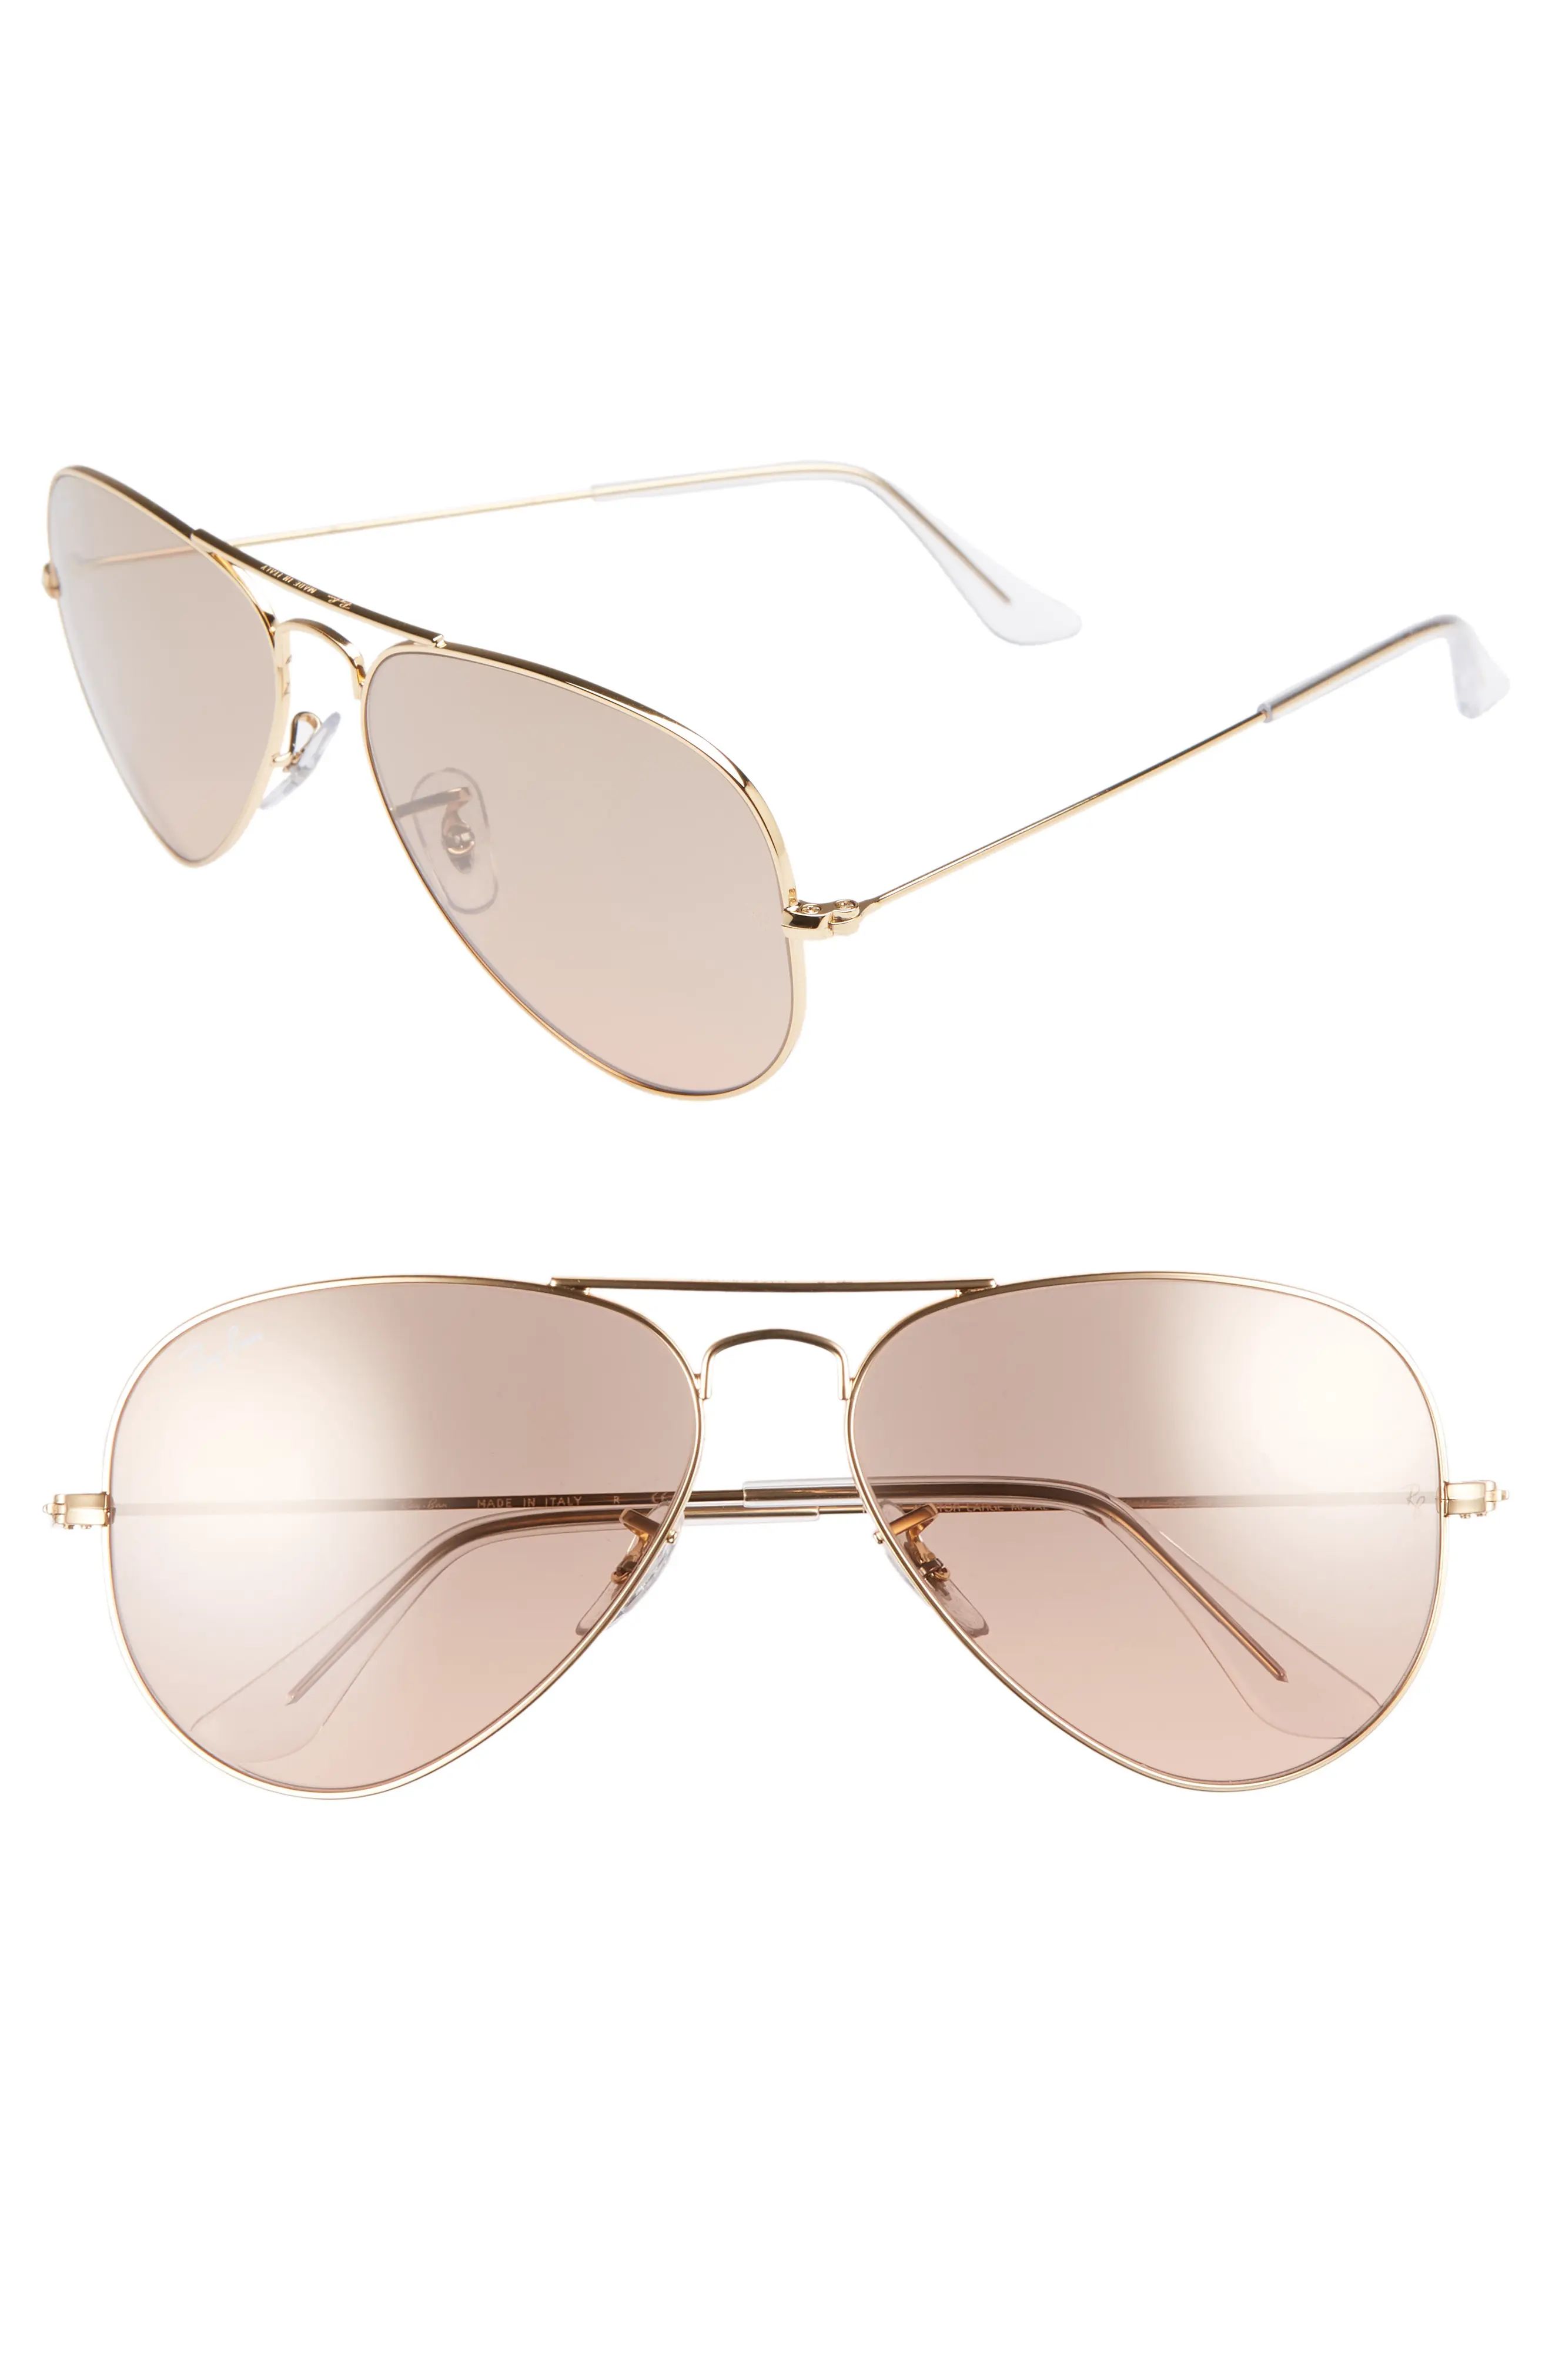 Ray-Ban Standard Original 58mm Aviator Sunglasses - Gold/ Pink Mirror | Nordstrom